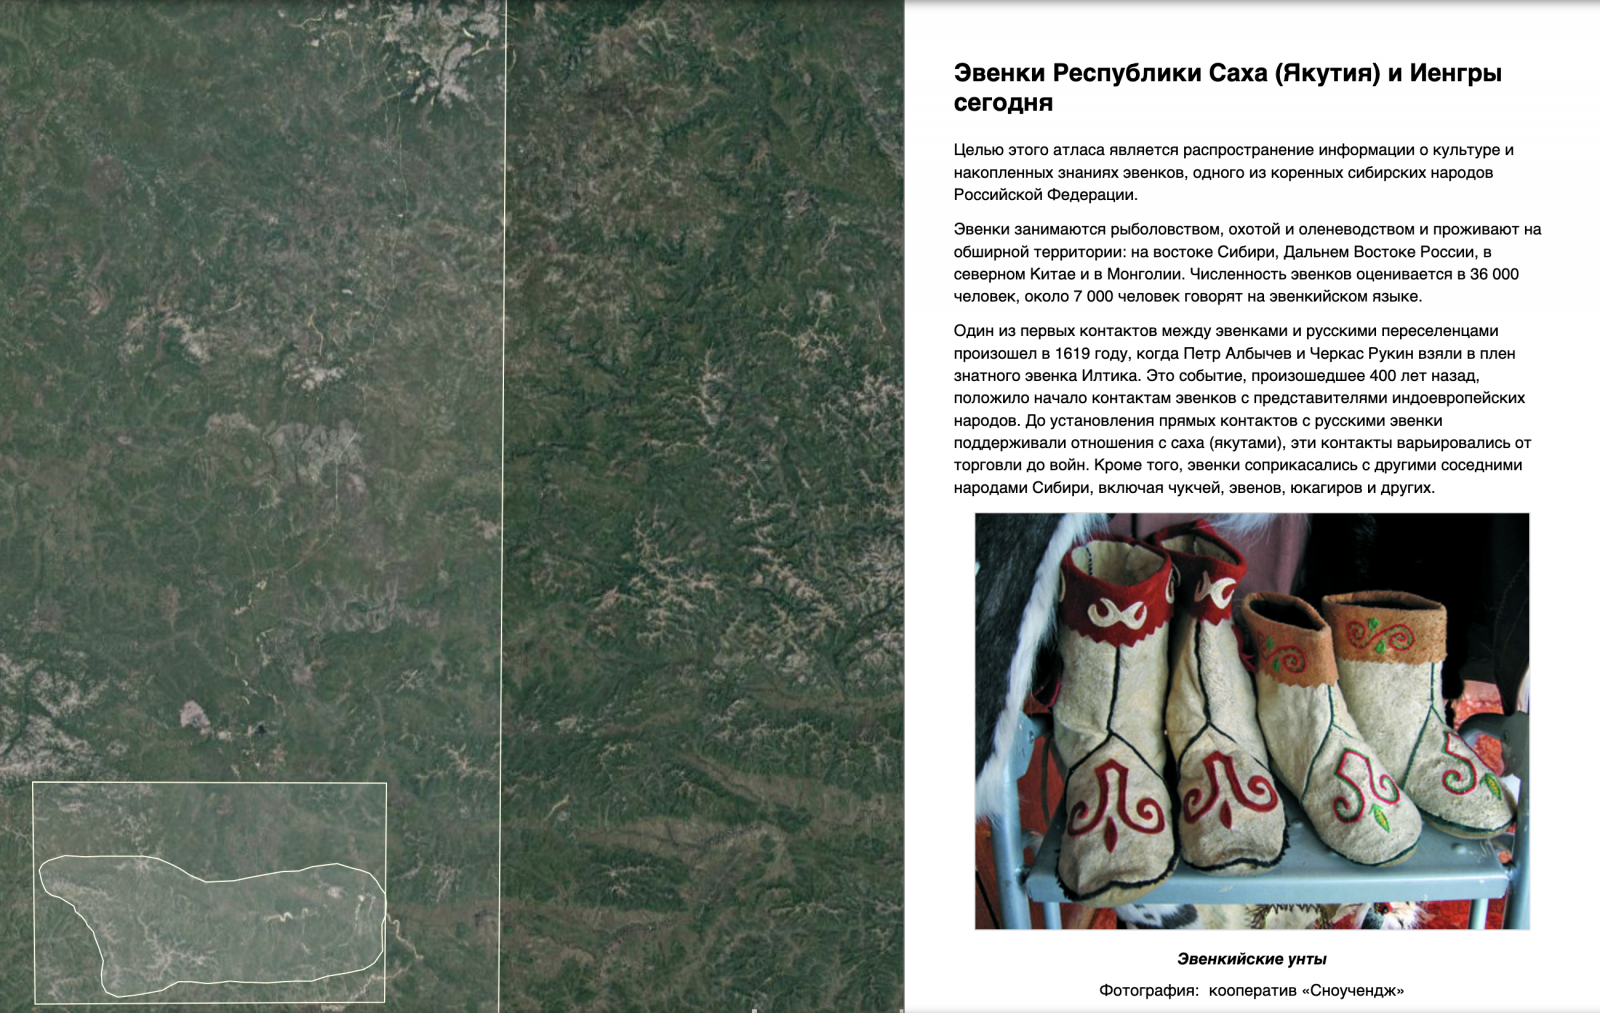 This image of the Evenki online atlas shows the Russina translation of the "Evenki of Sakha-Yakutia and Iyengra Today" page. Credit: Evenki Atlas | High-resolution image